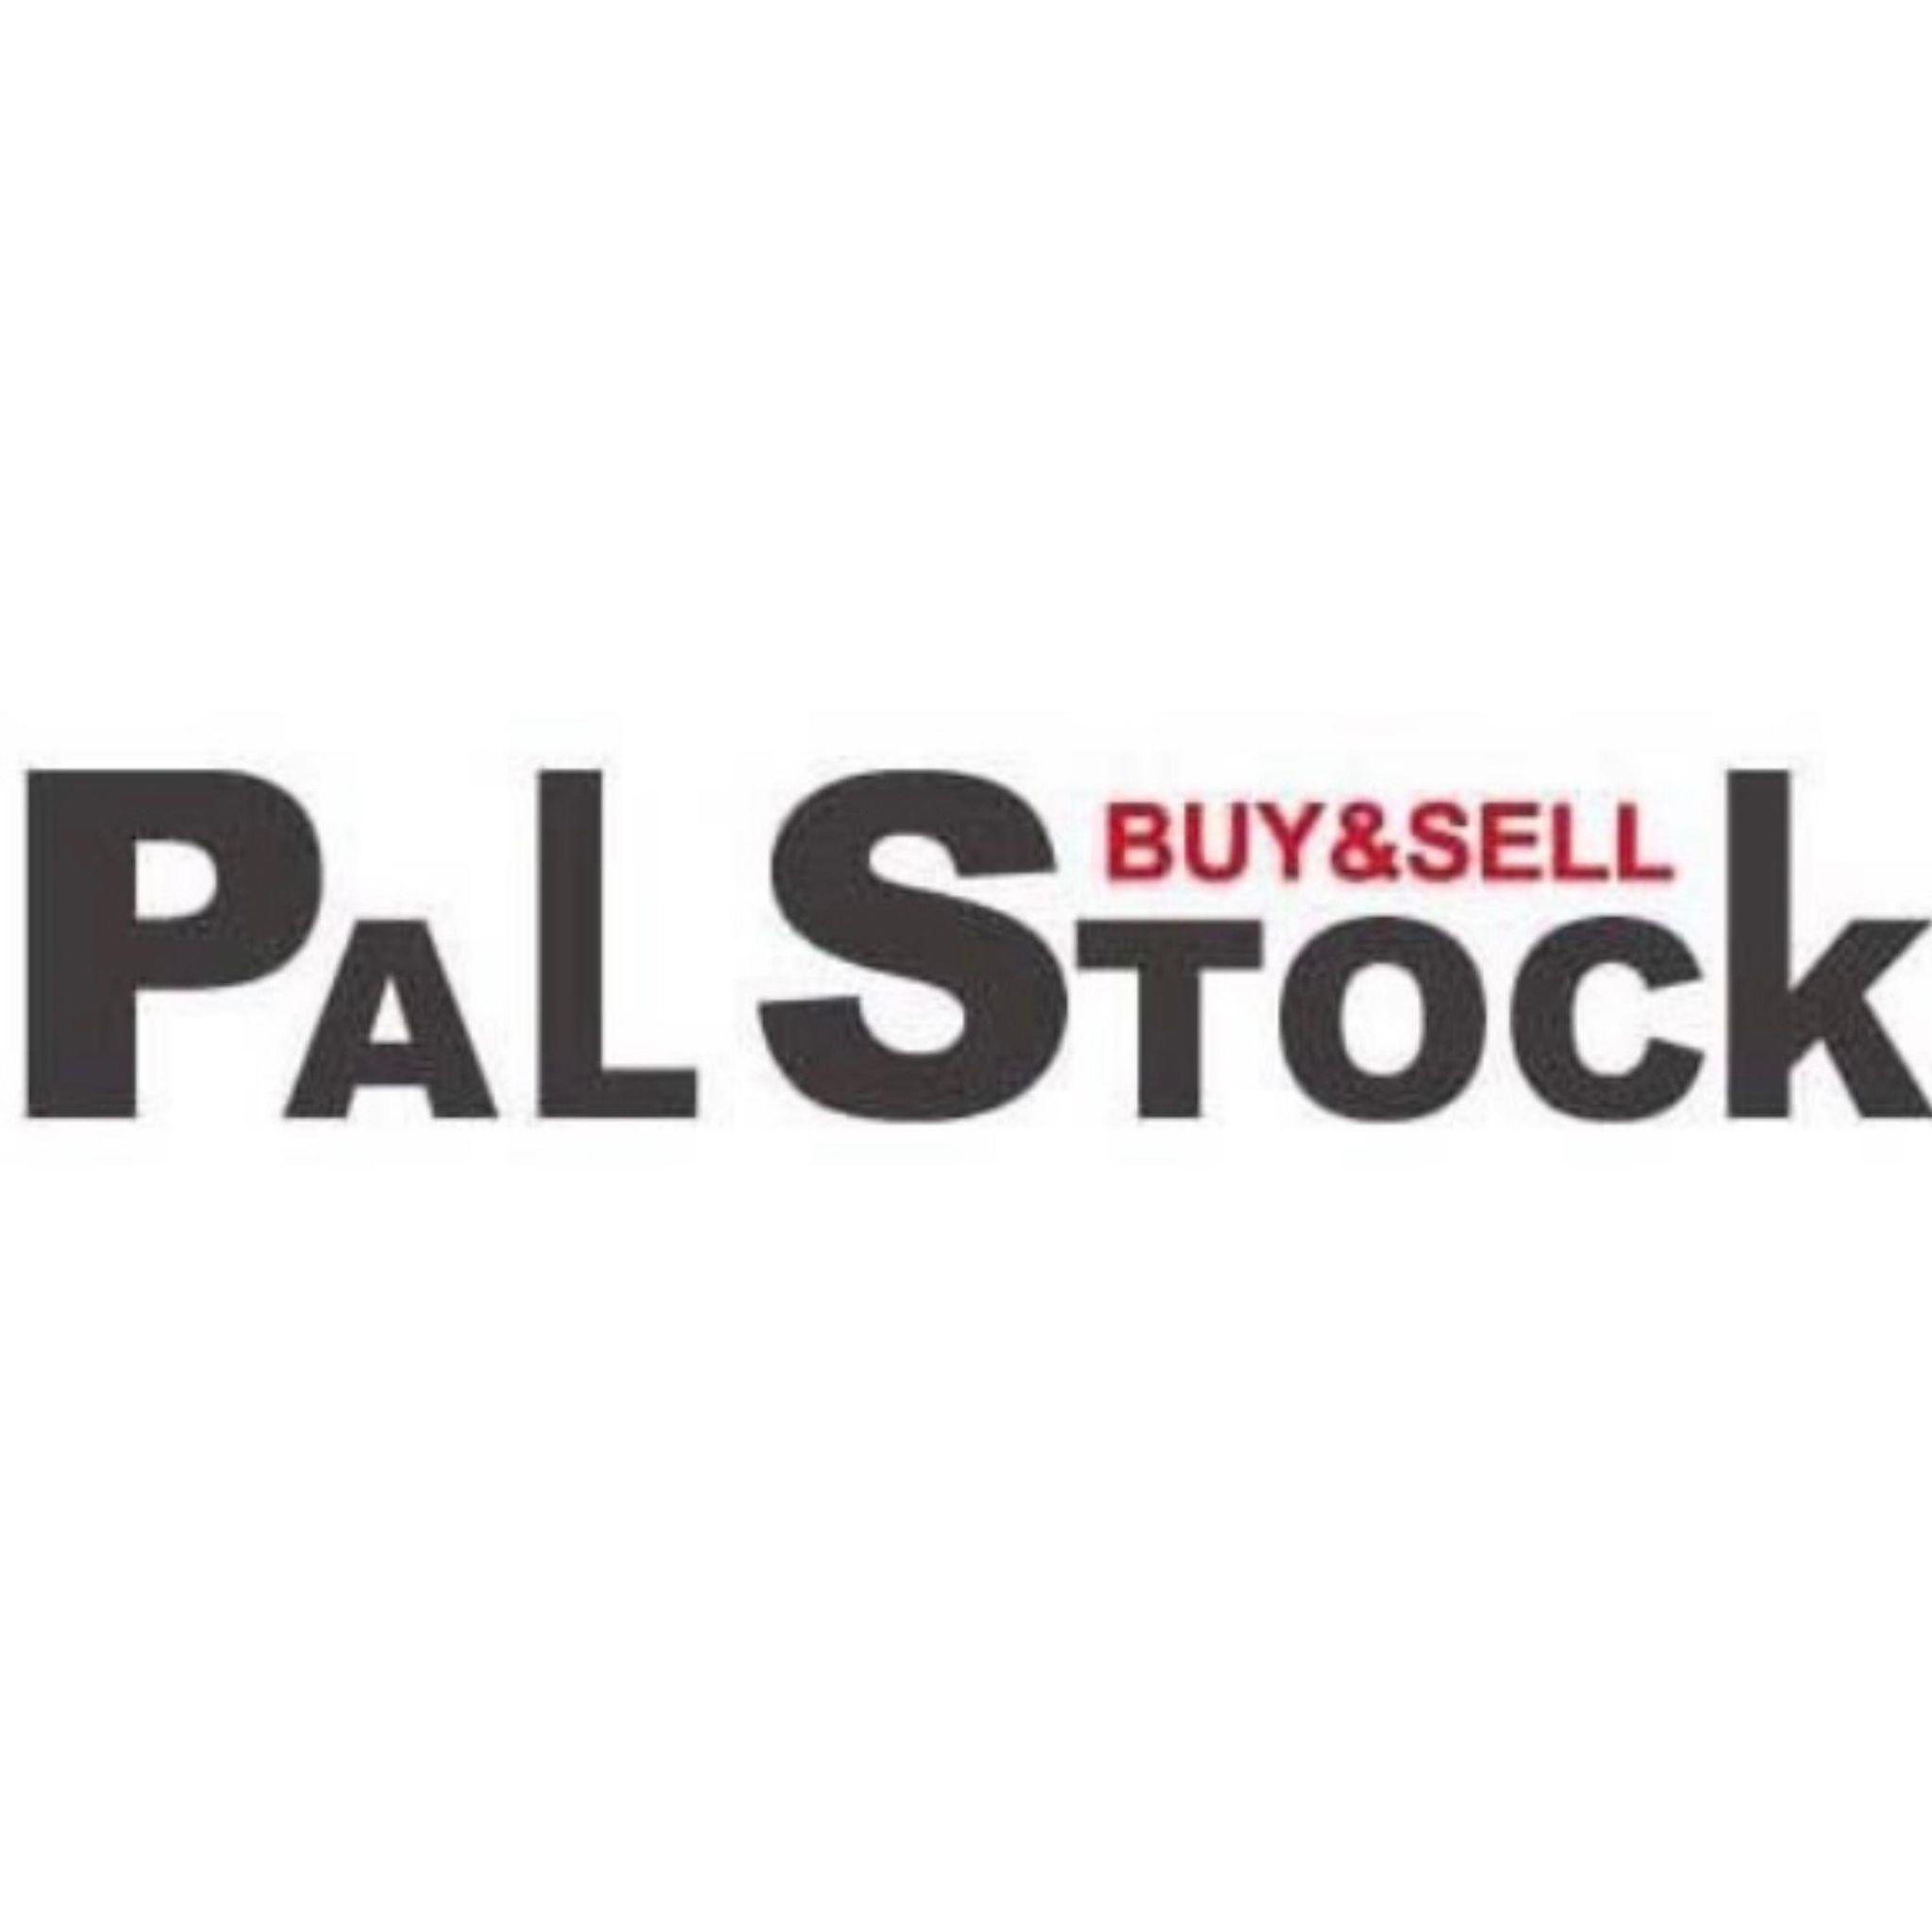 BUY＆SELL PALSTOCK Logo